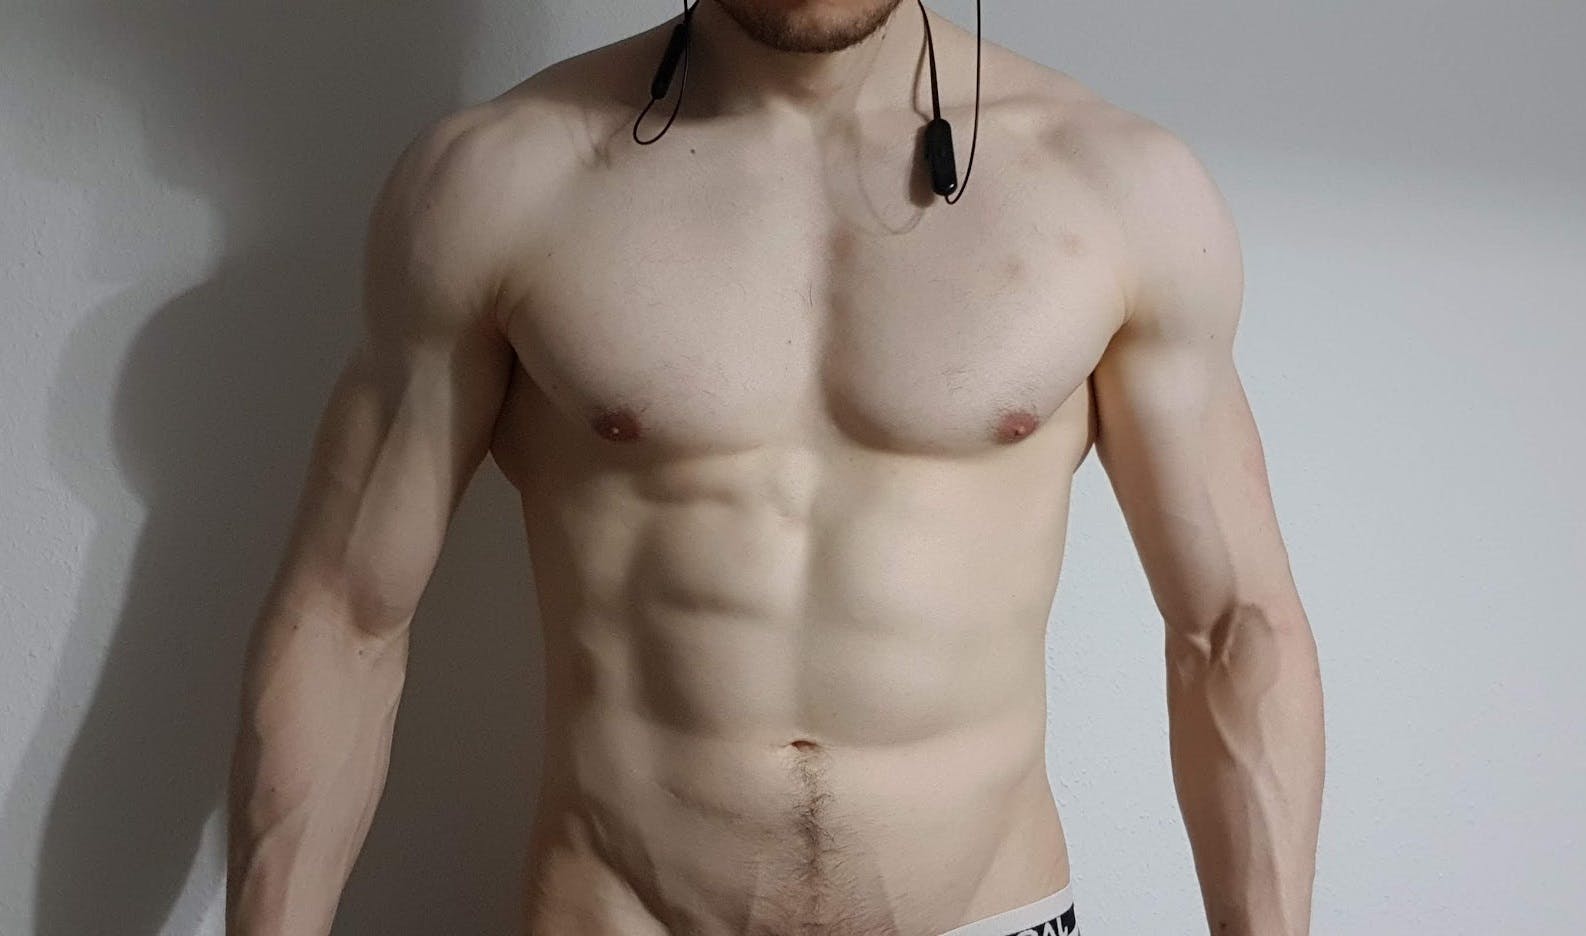 A muscular male torso